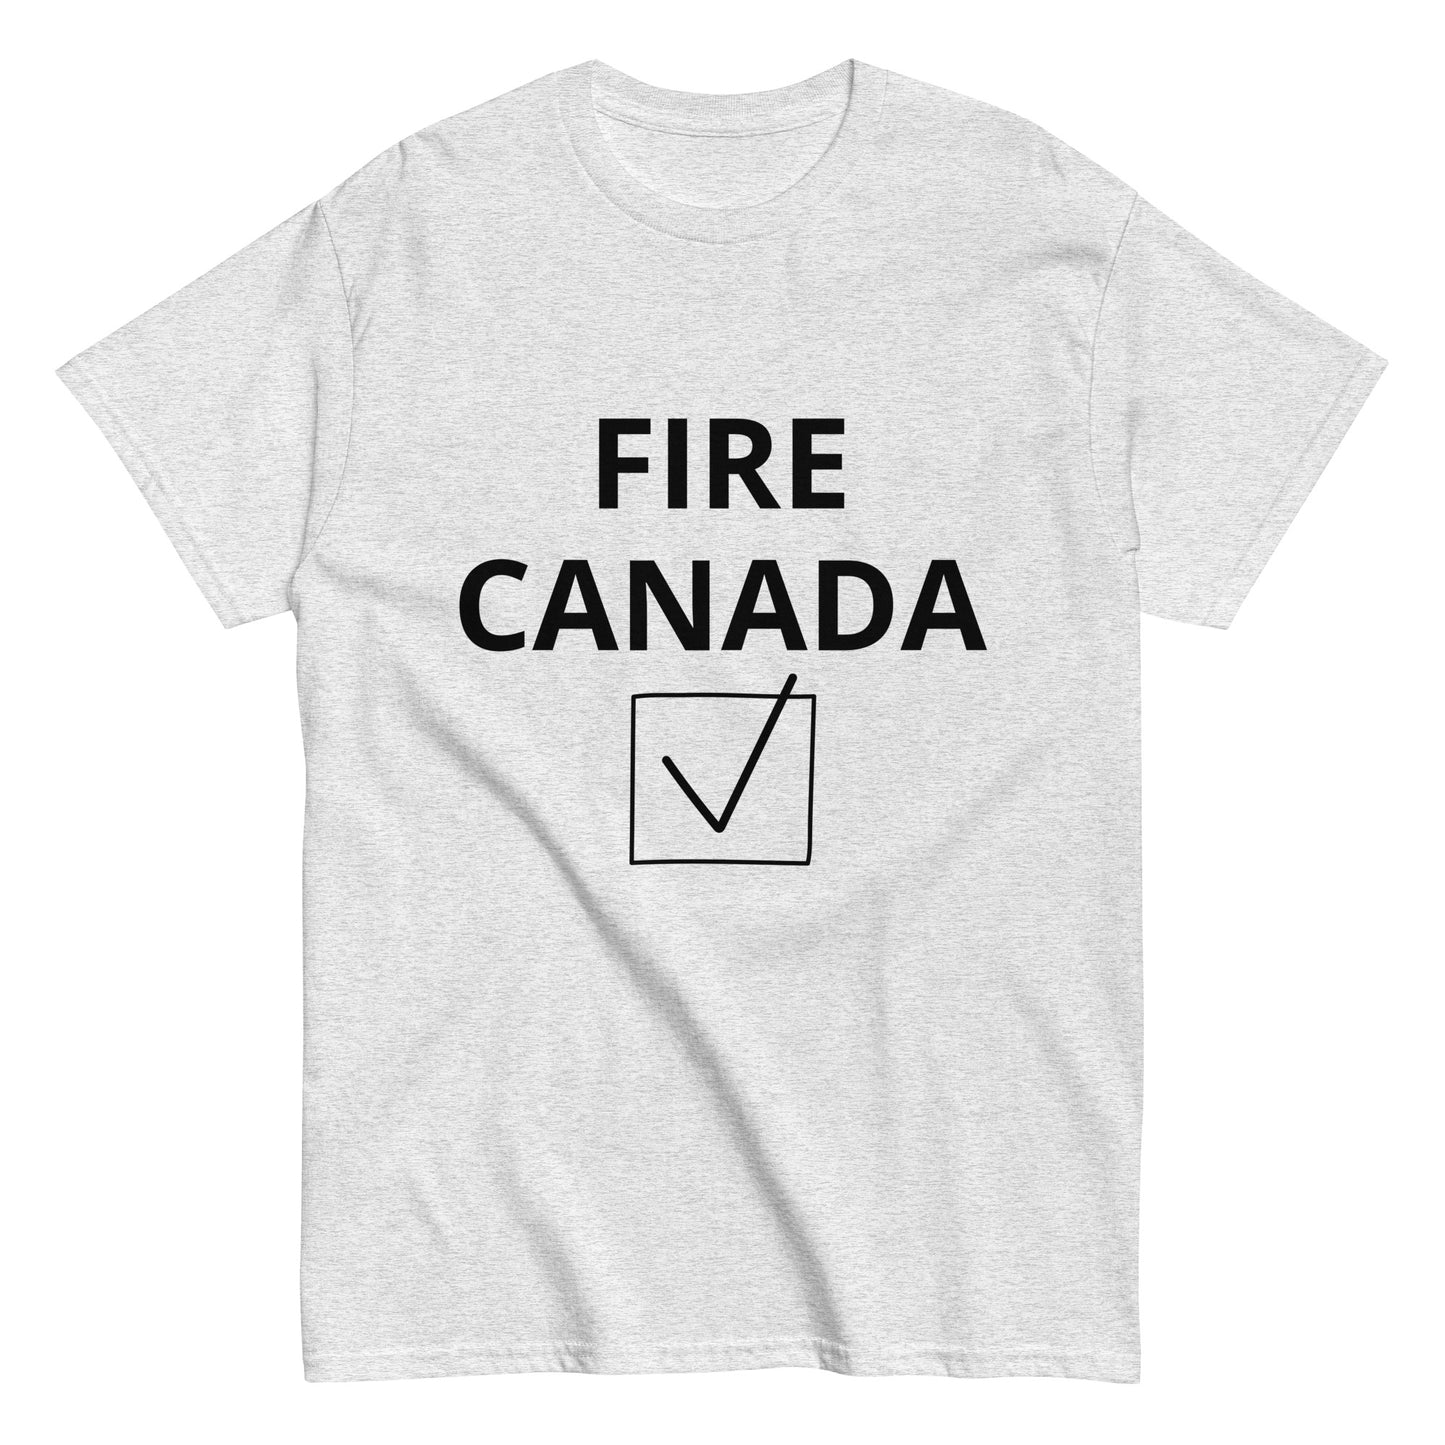 FIRE CANADA